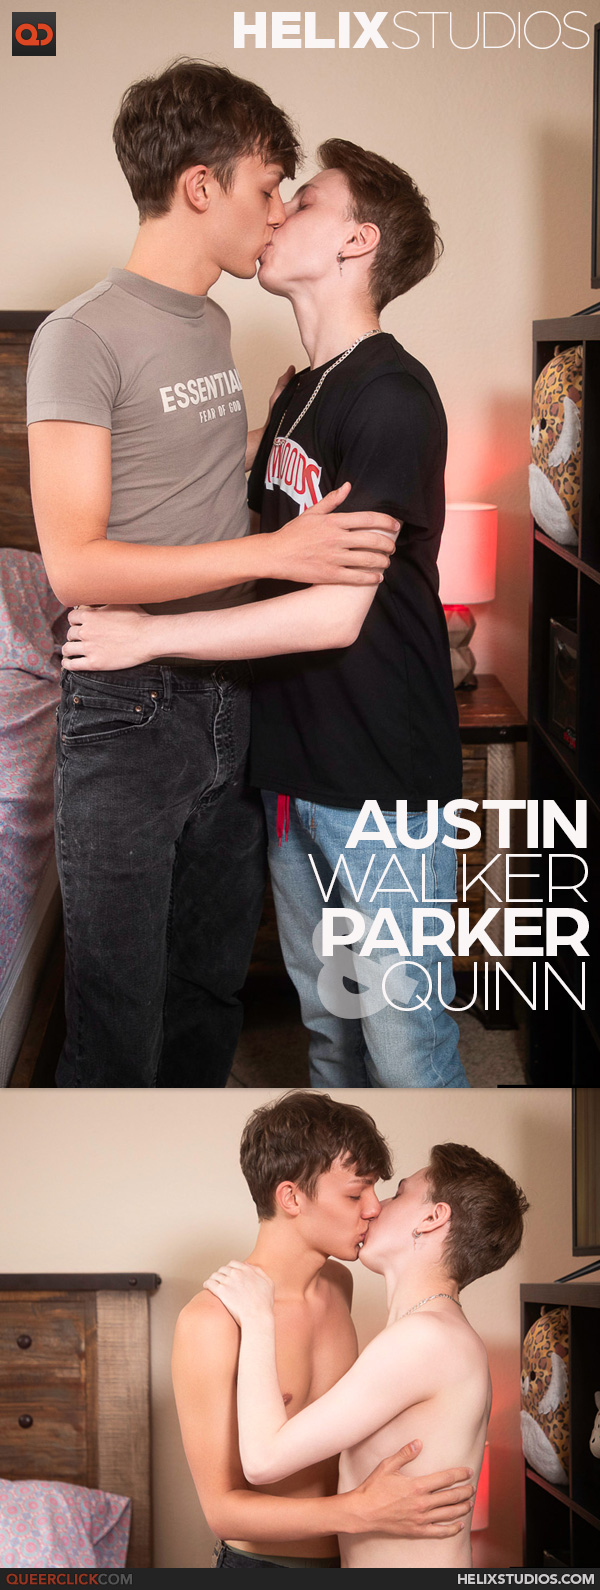 Helix Studios: Parker Quinn and Austin Walker